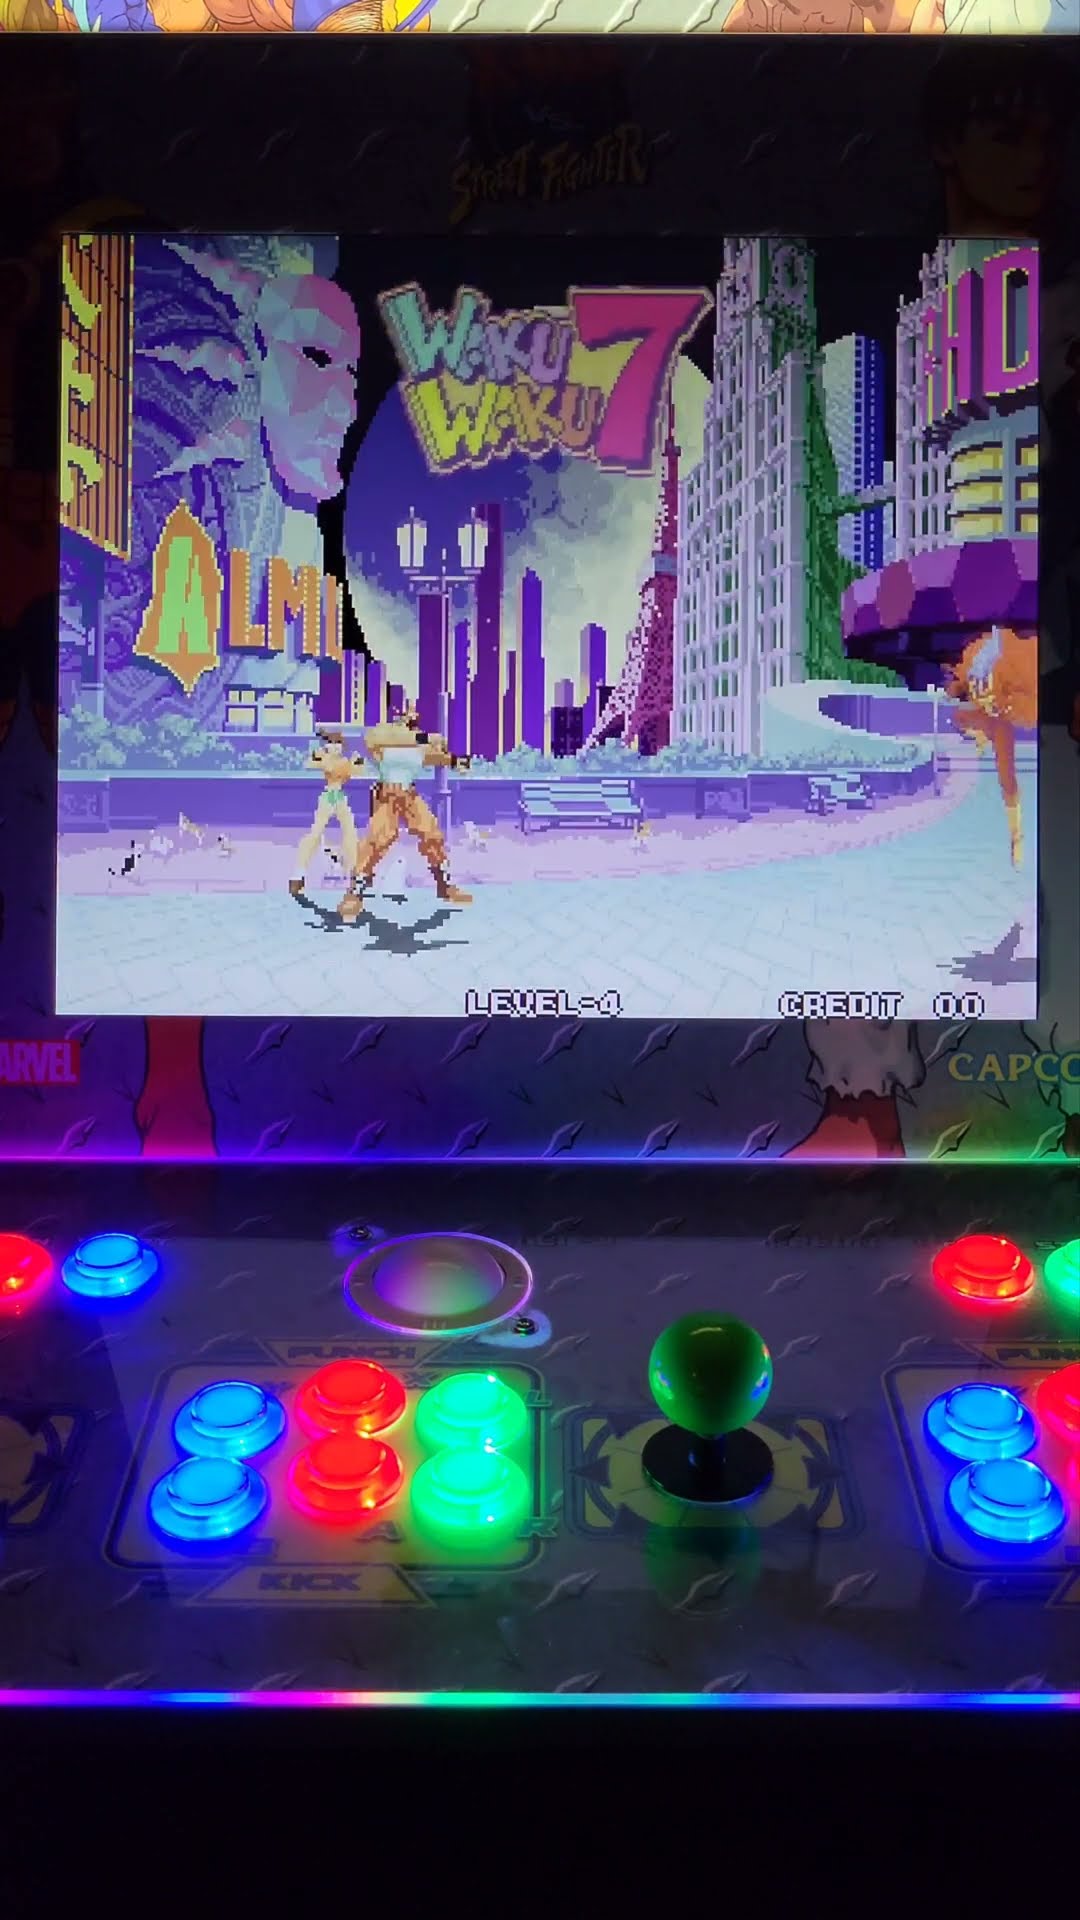 Waku Waku 7 Slash v. Dandy-J #retrogaming #arcademodup